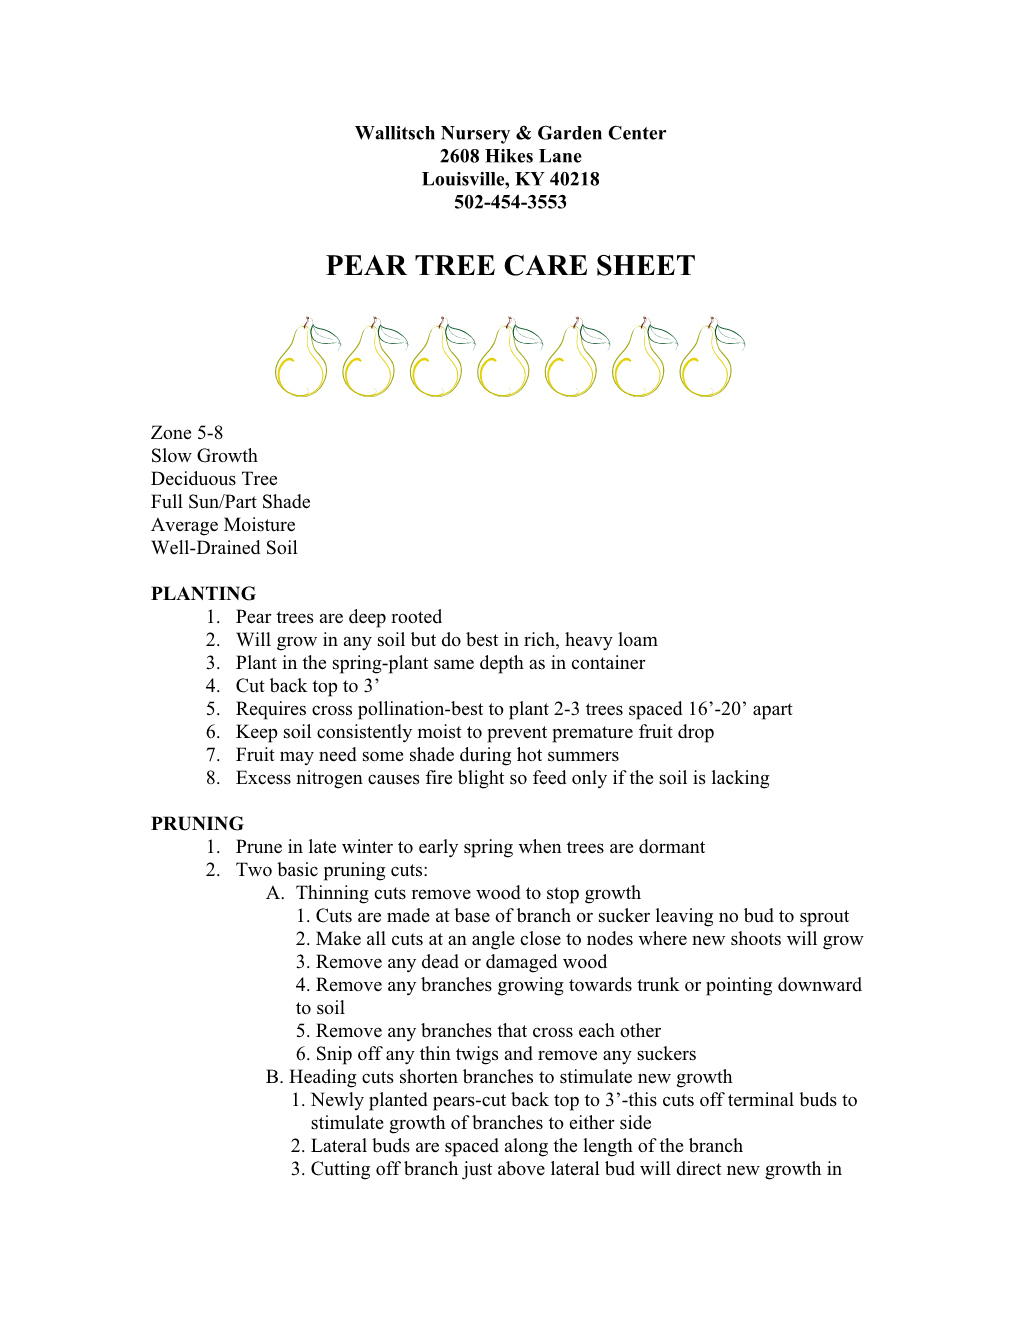 Pear Tree Care Sheet